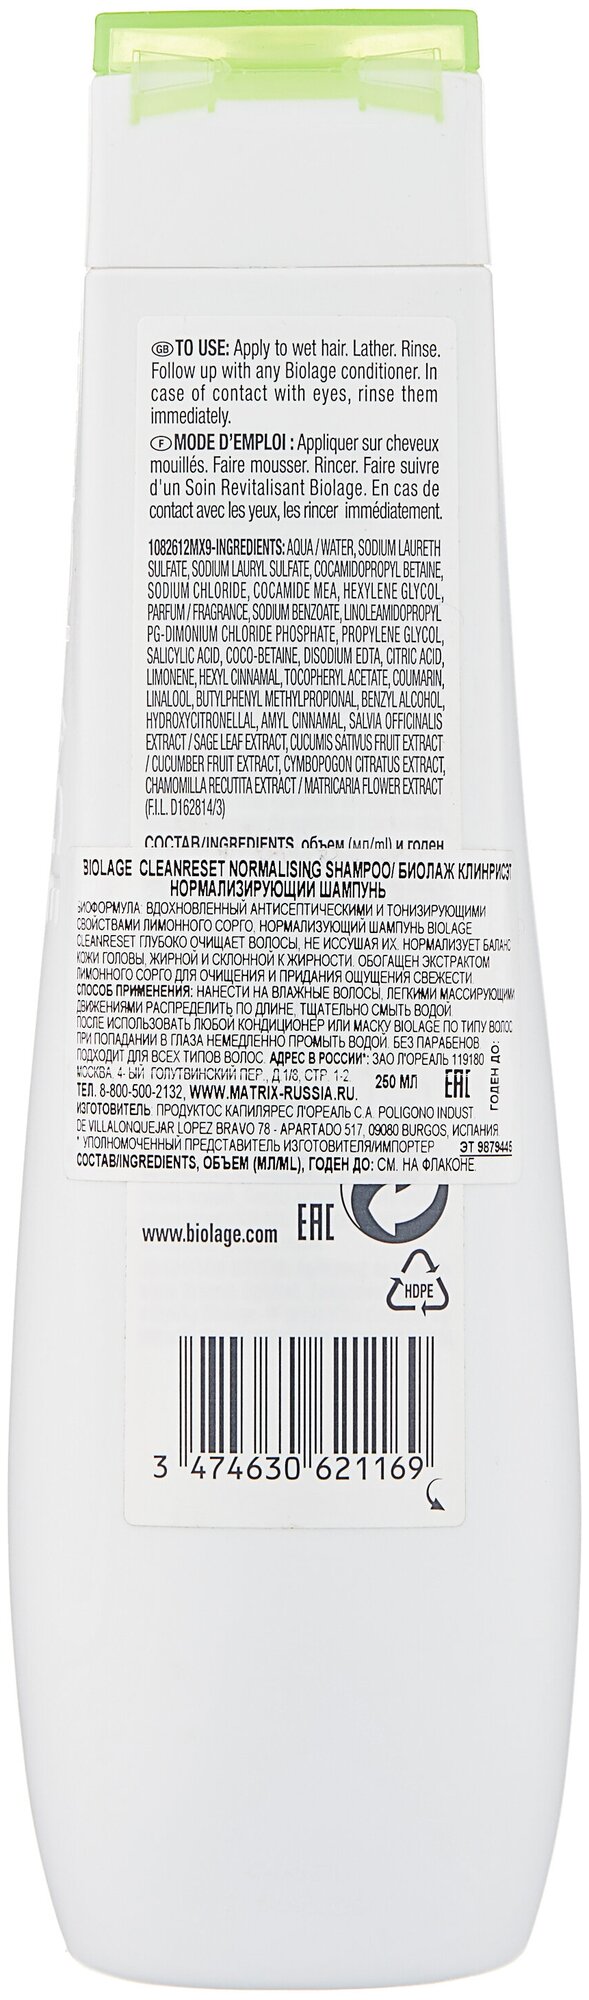 Matrix Шампунь нормализующий Biolage Cleanreset Normalizing для кожи головы, 250 мл (Matrix, ) - фото №2